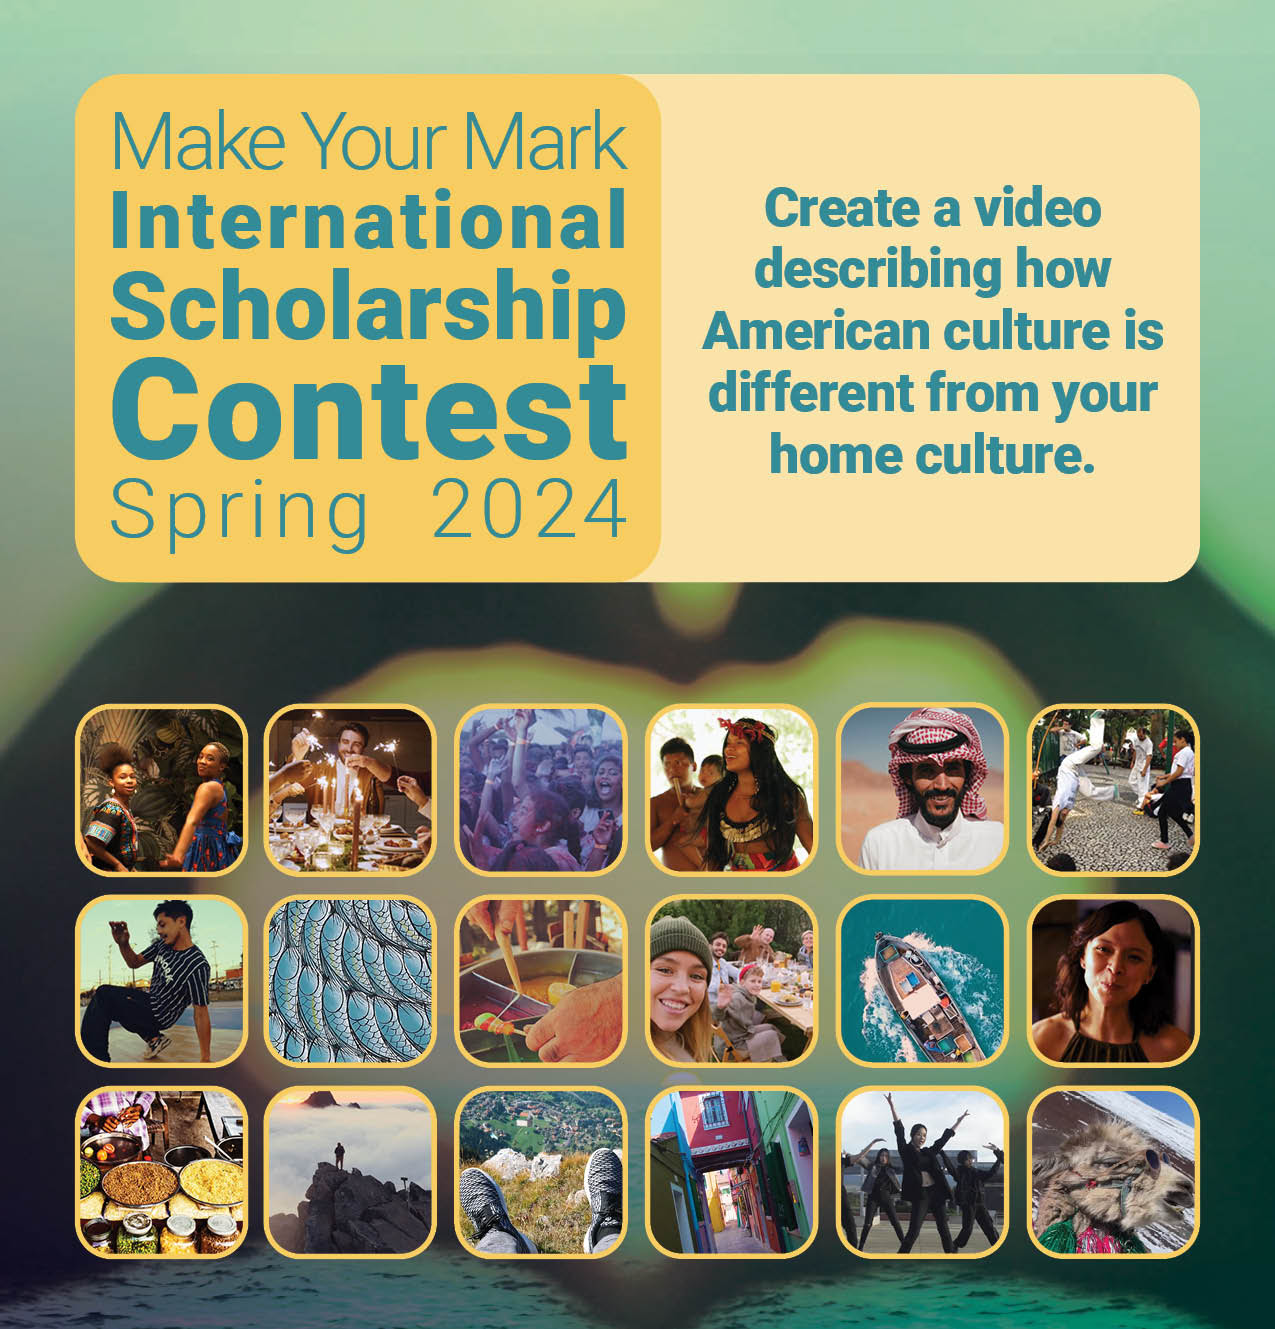 Make Your Mark International Scholarship Contest Spring 2024